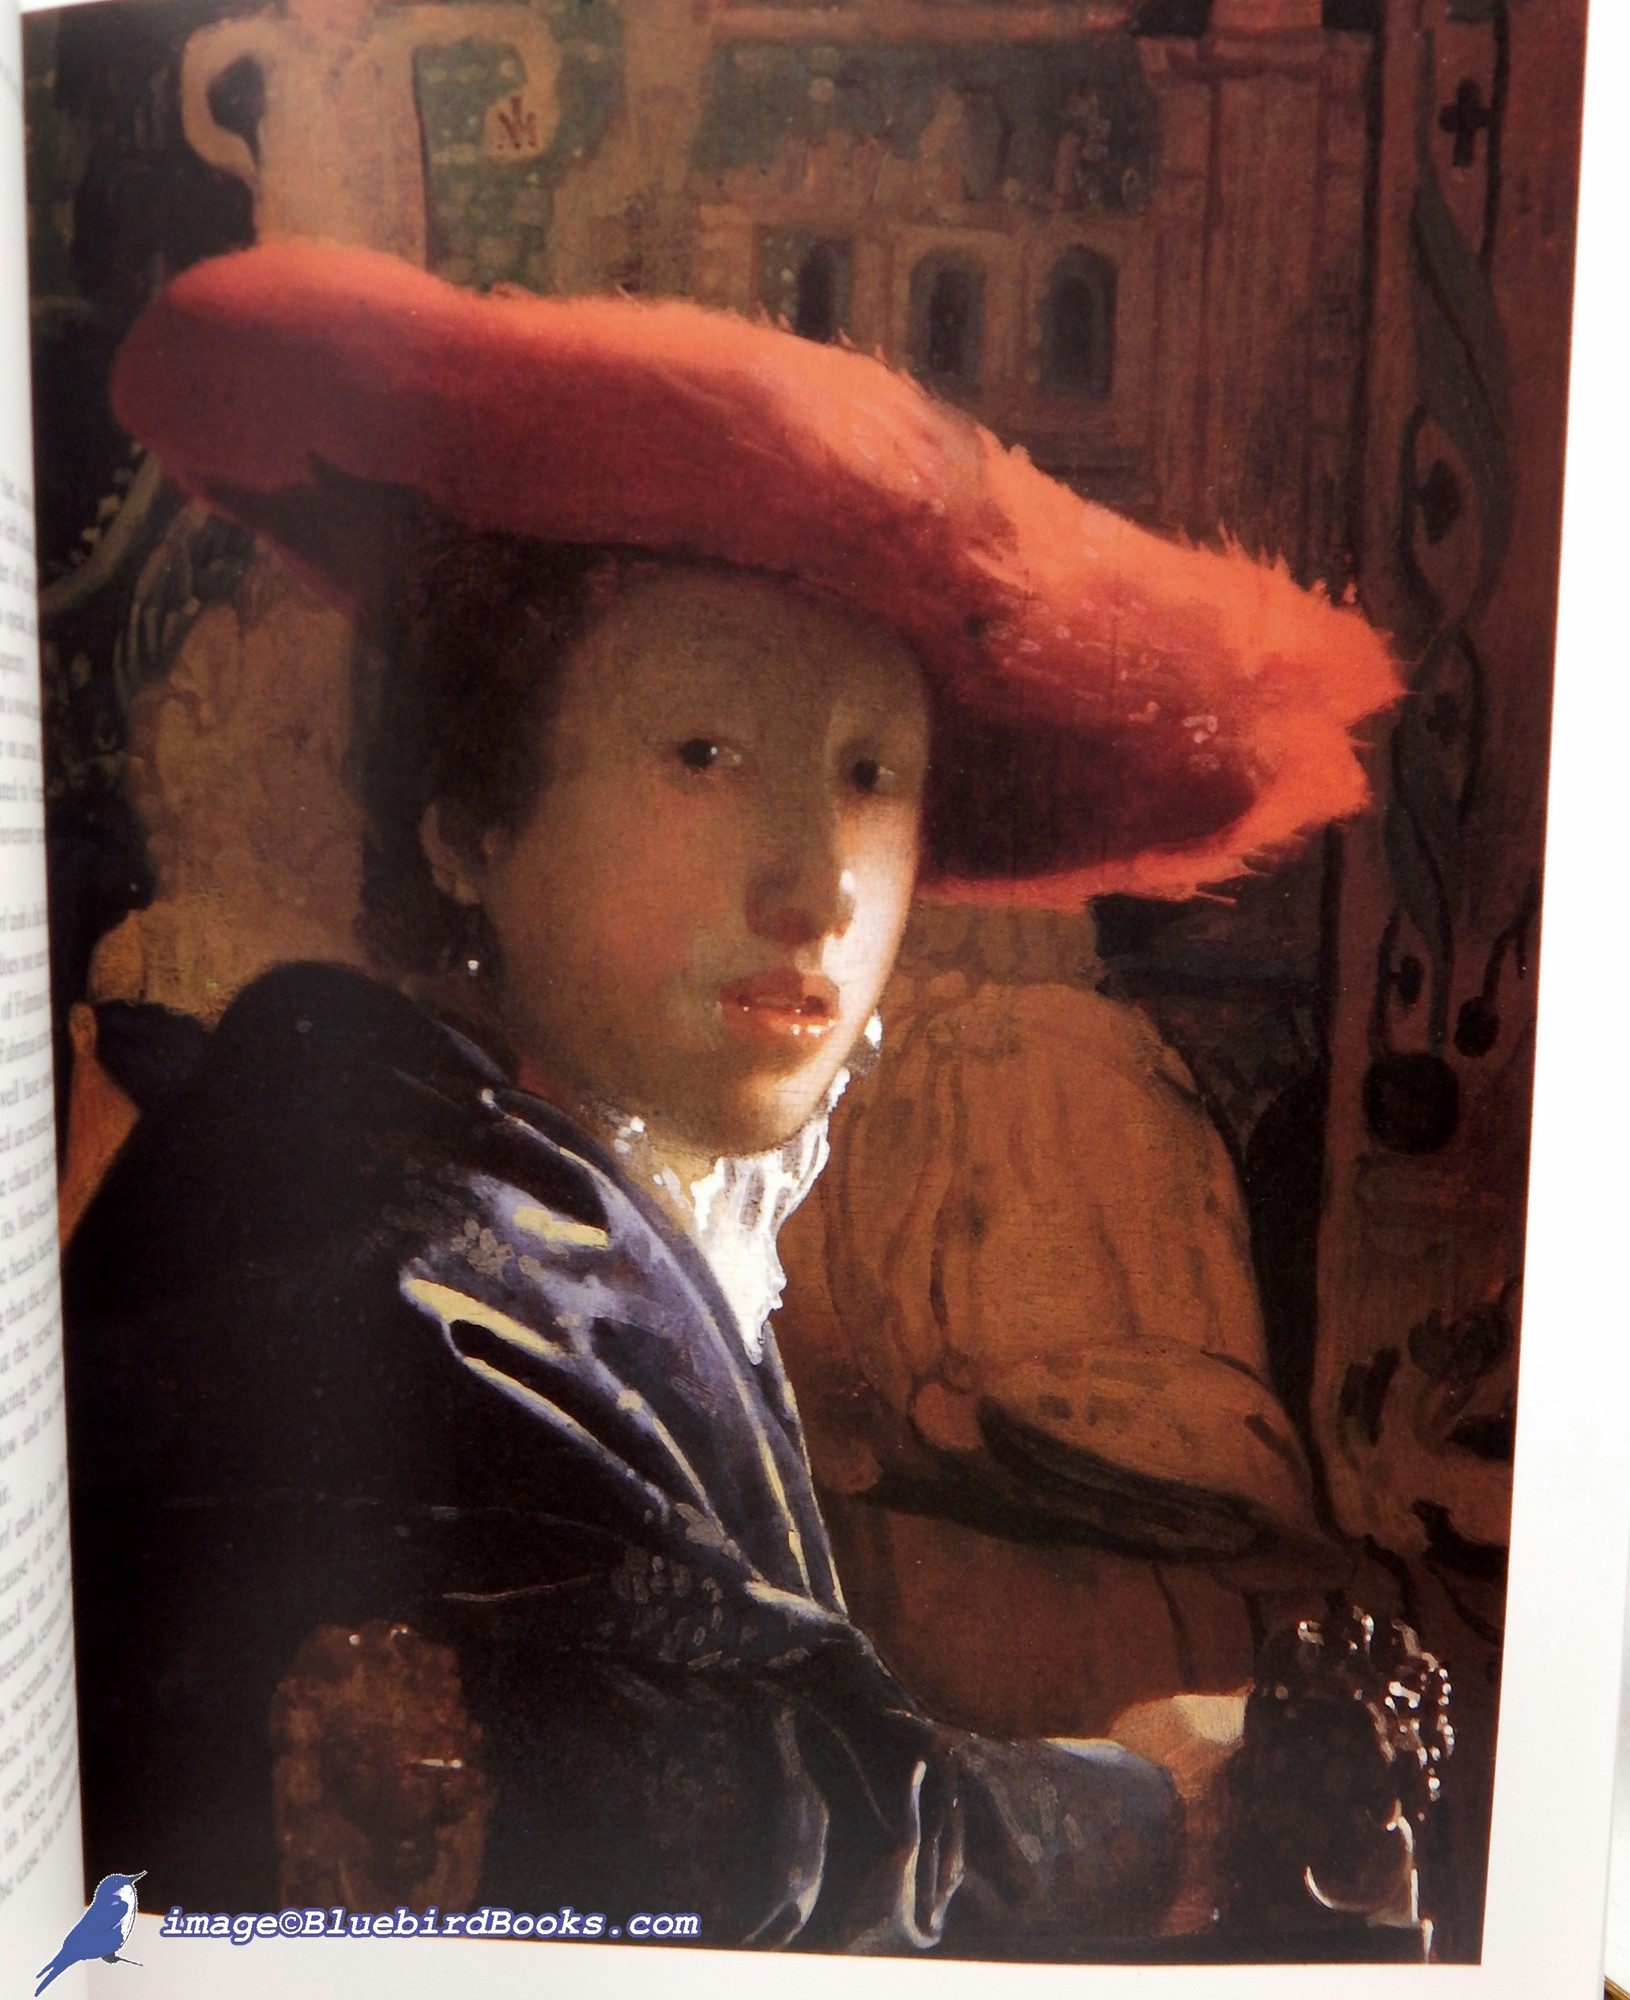 BAILEY, MARTIN - Vermeer (Phaidon Colour Library)